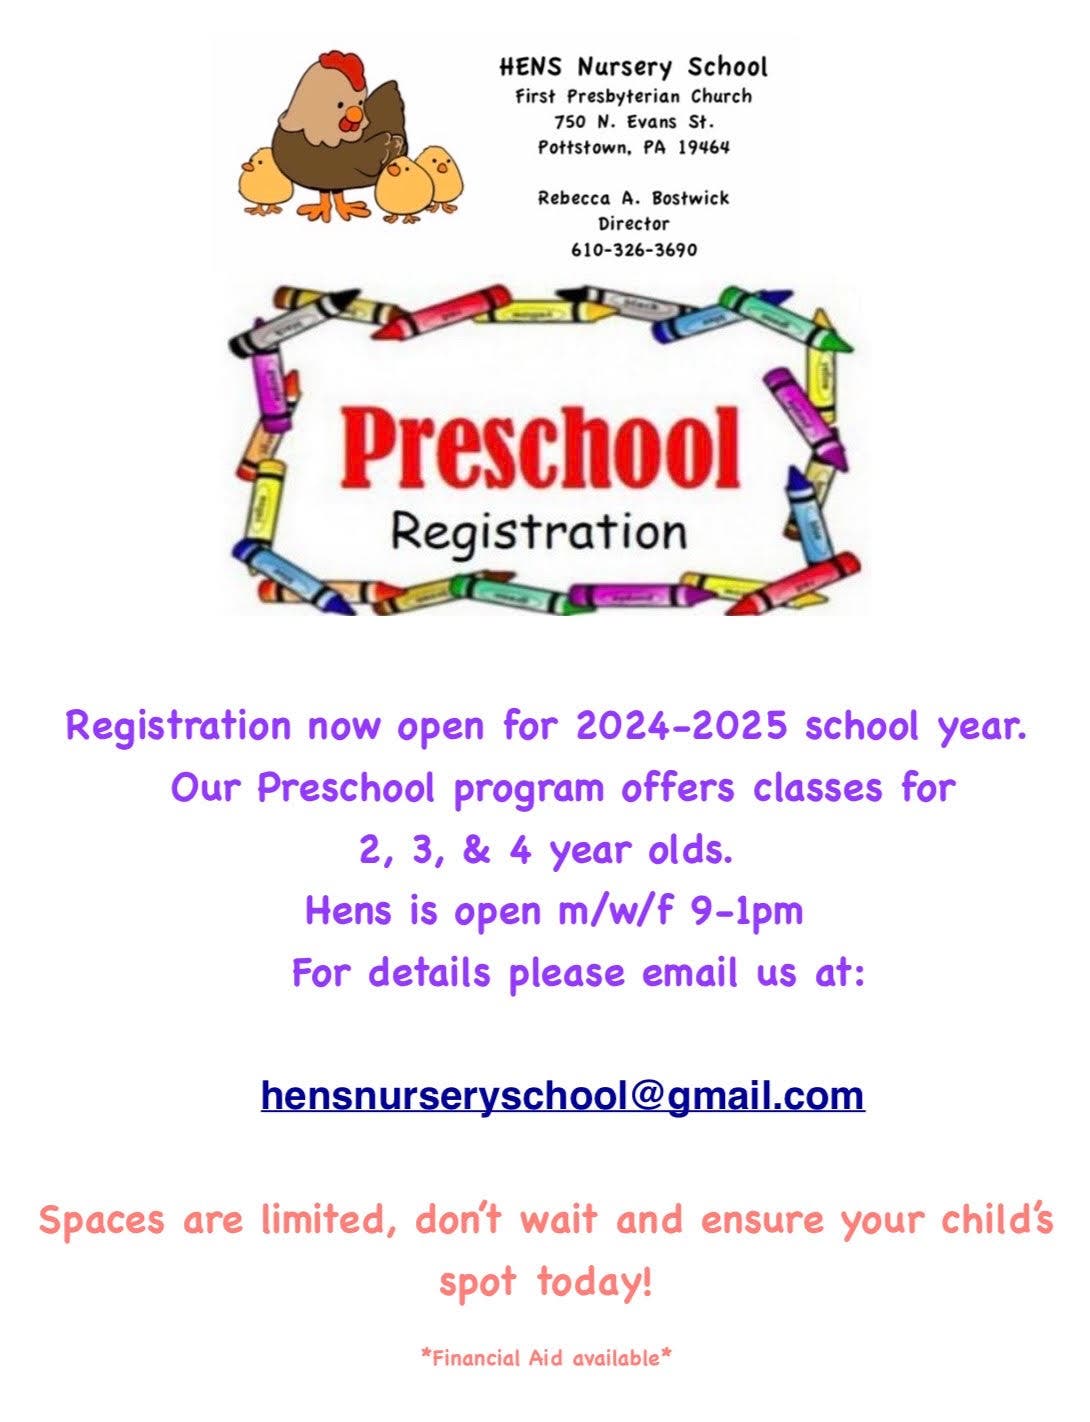 Preschool registration now open for the 24-25 school year.